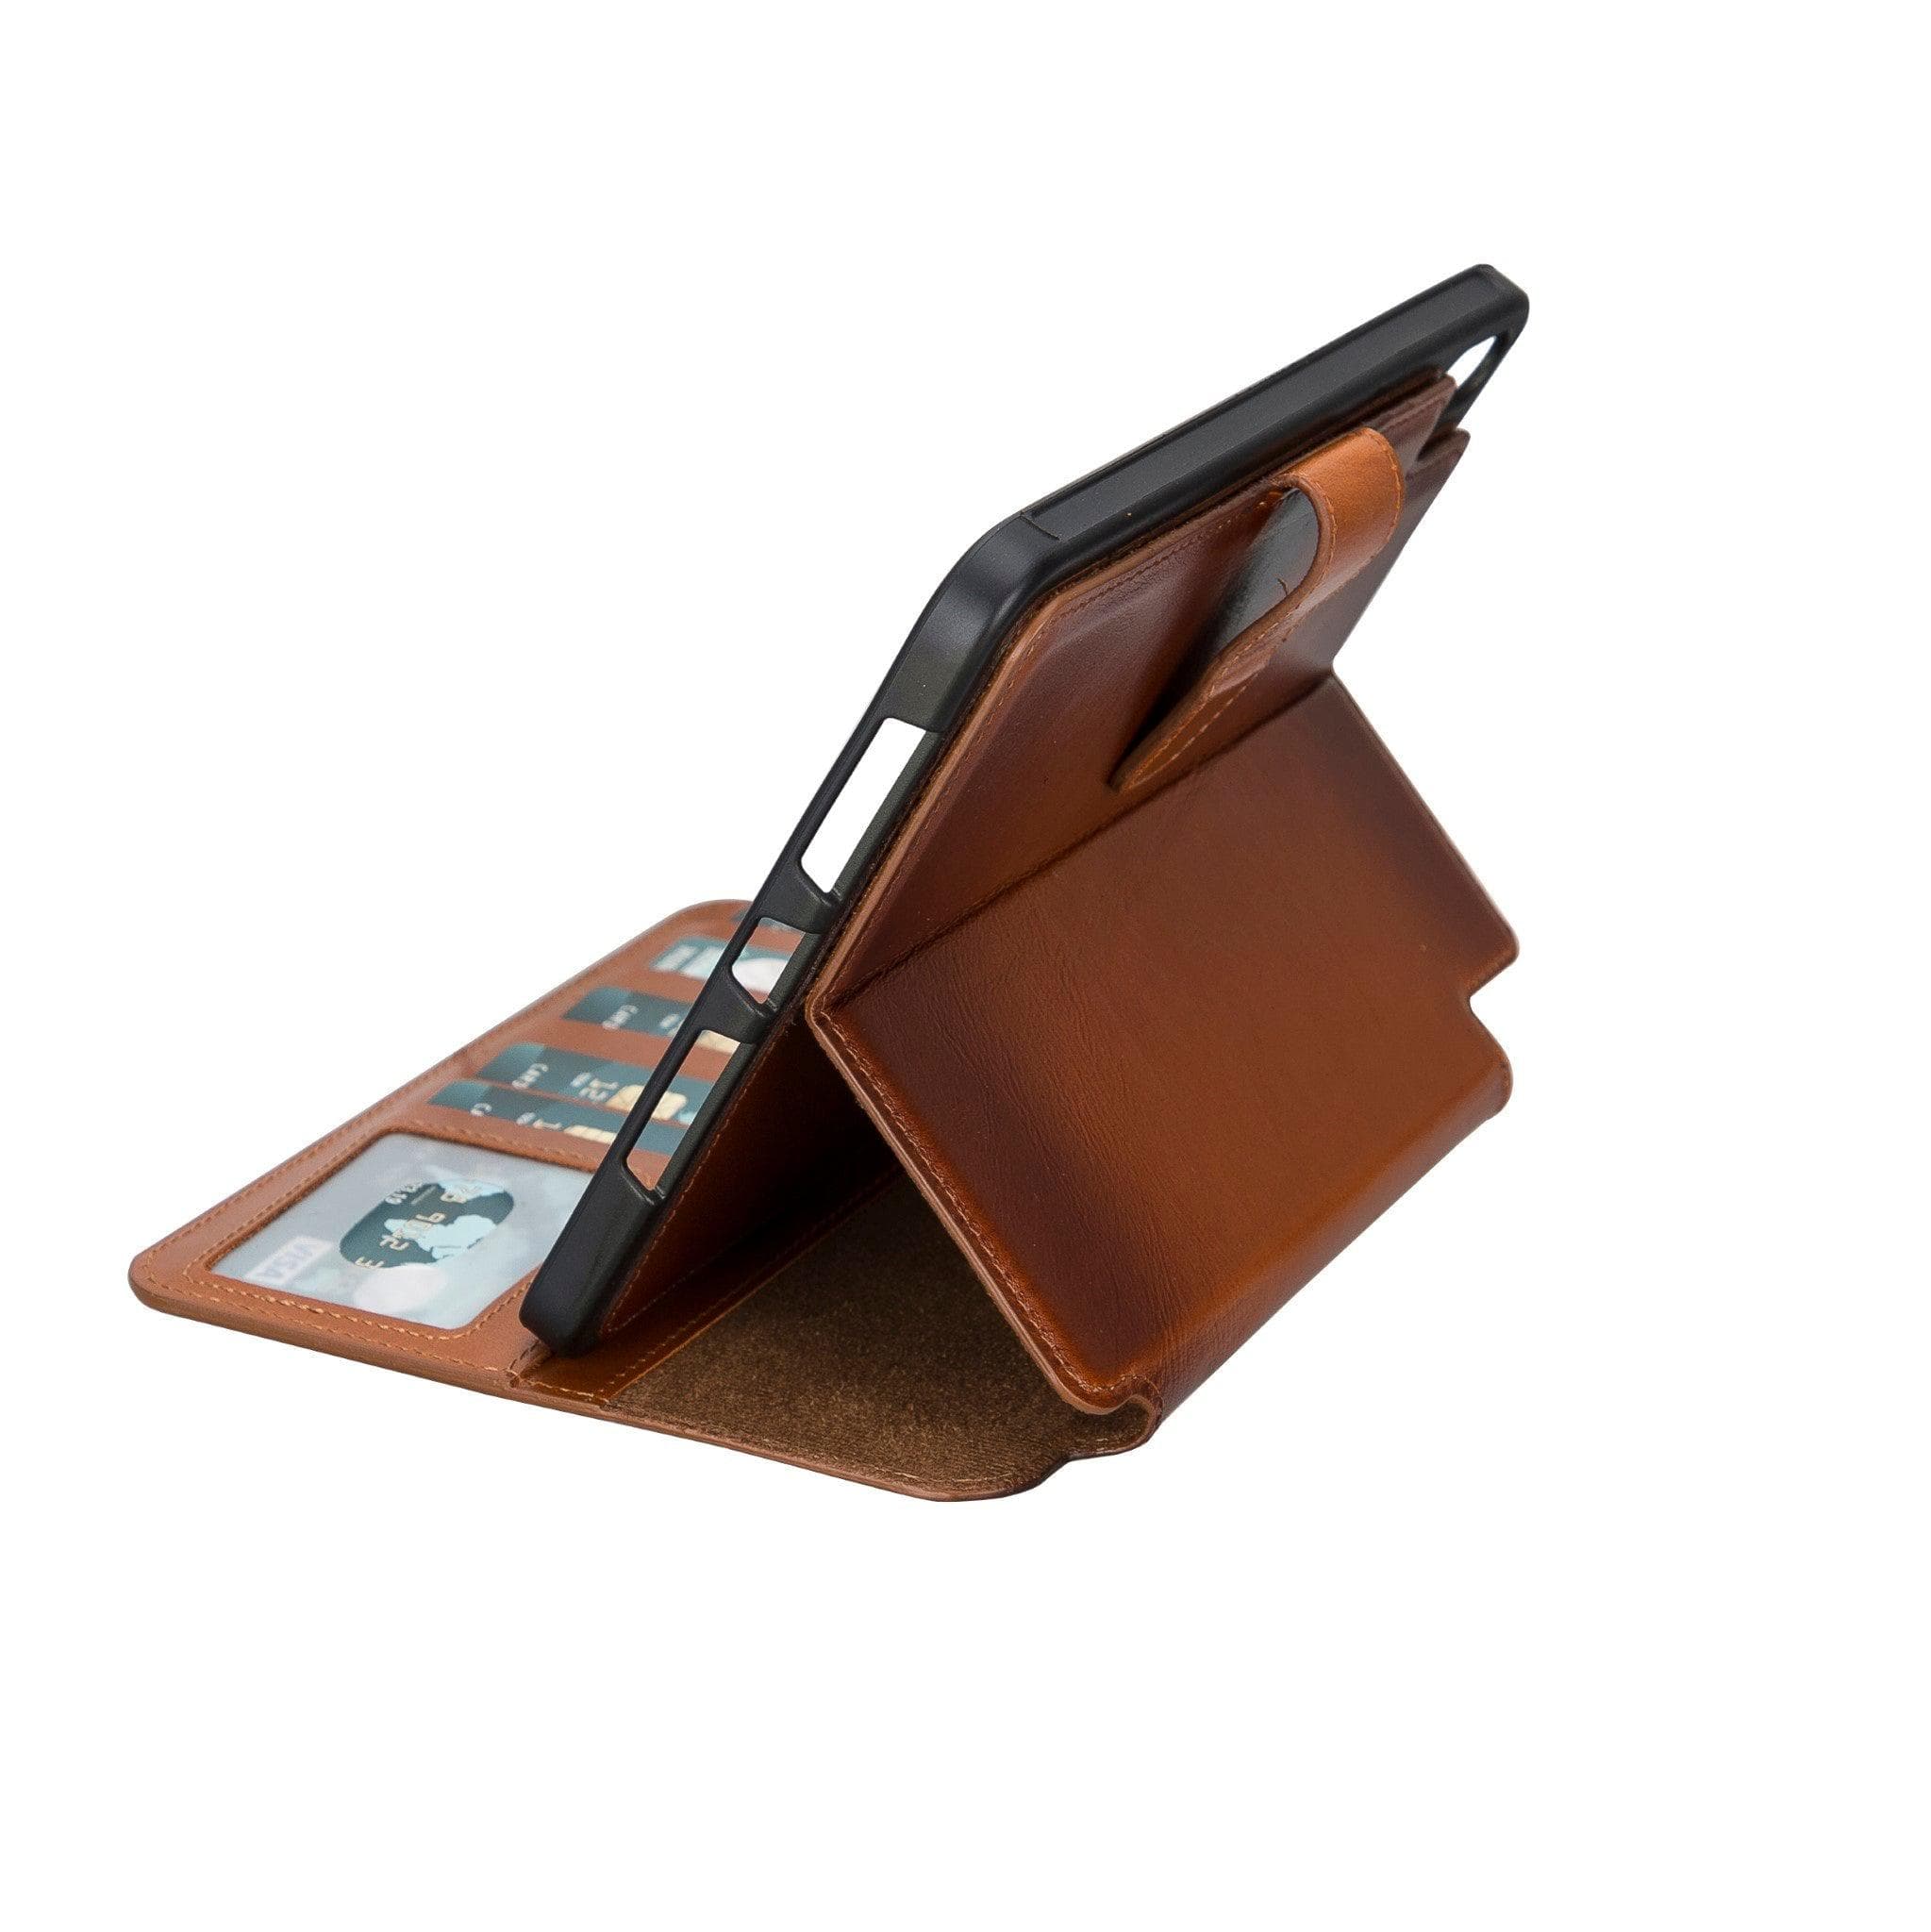 B2B - iPad Series Leather Wallet Case Bomonti